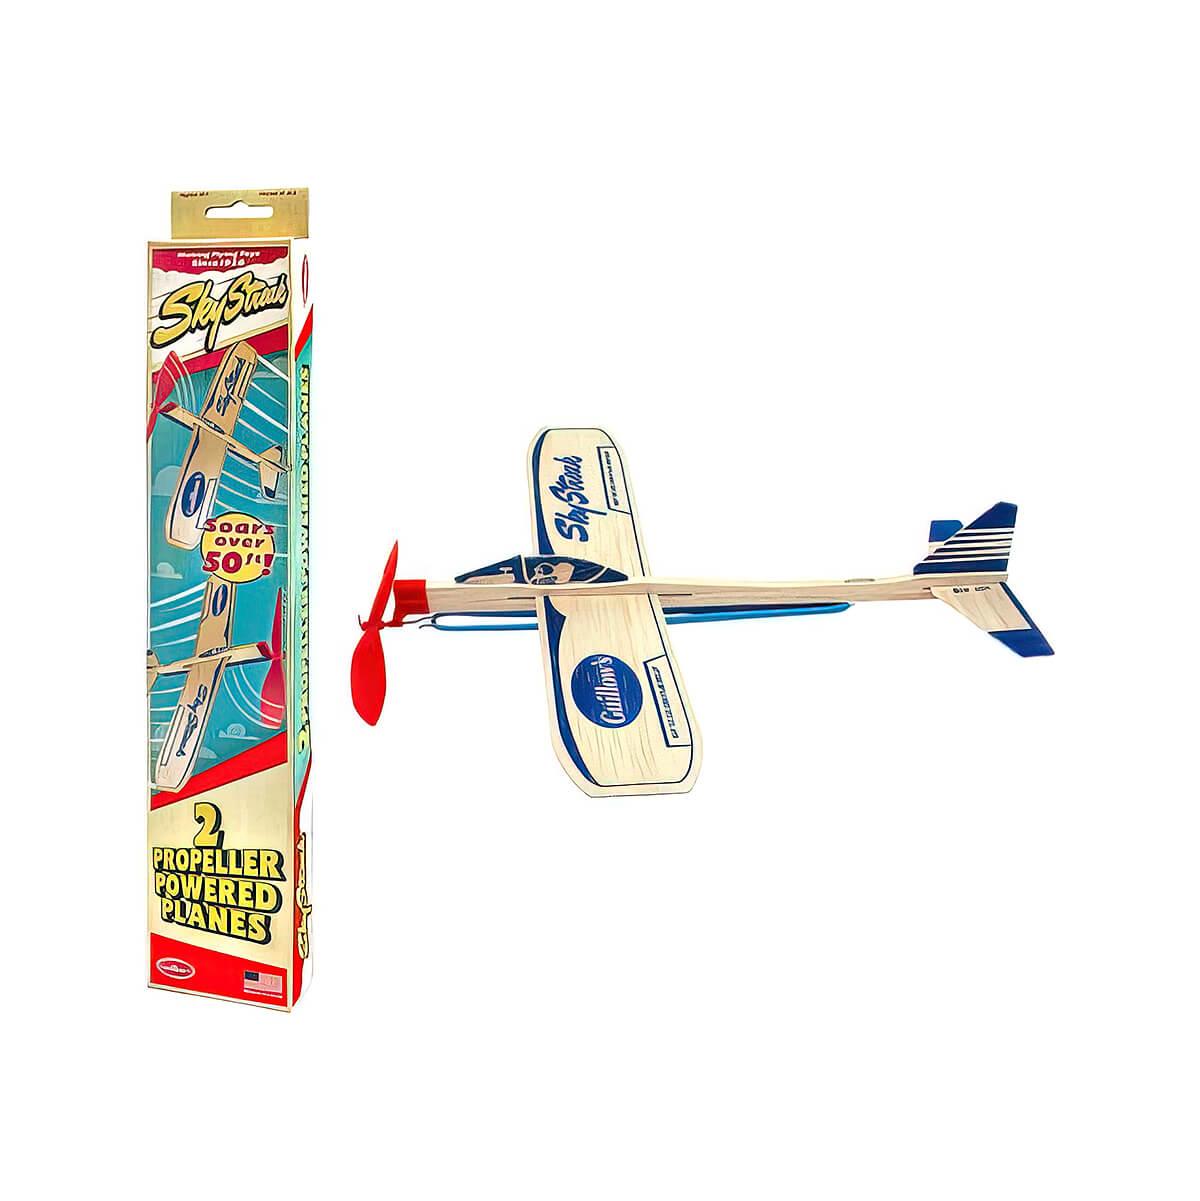  Guillow's Sky Streak Balsa Power Plane Twin Pack Toy